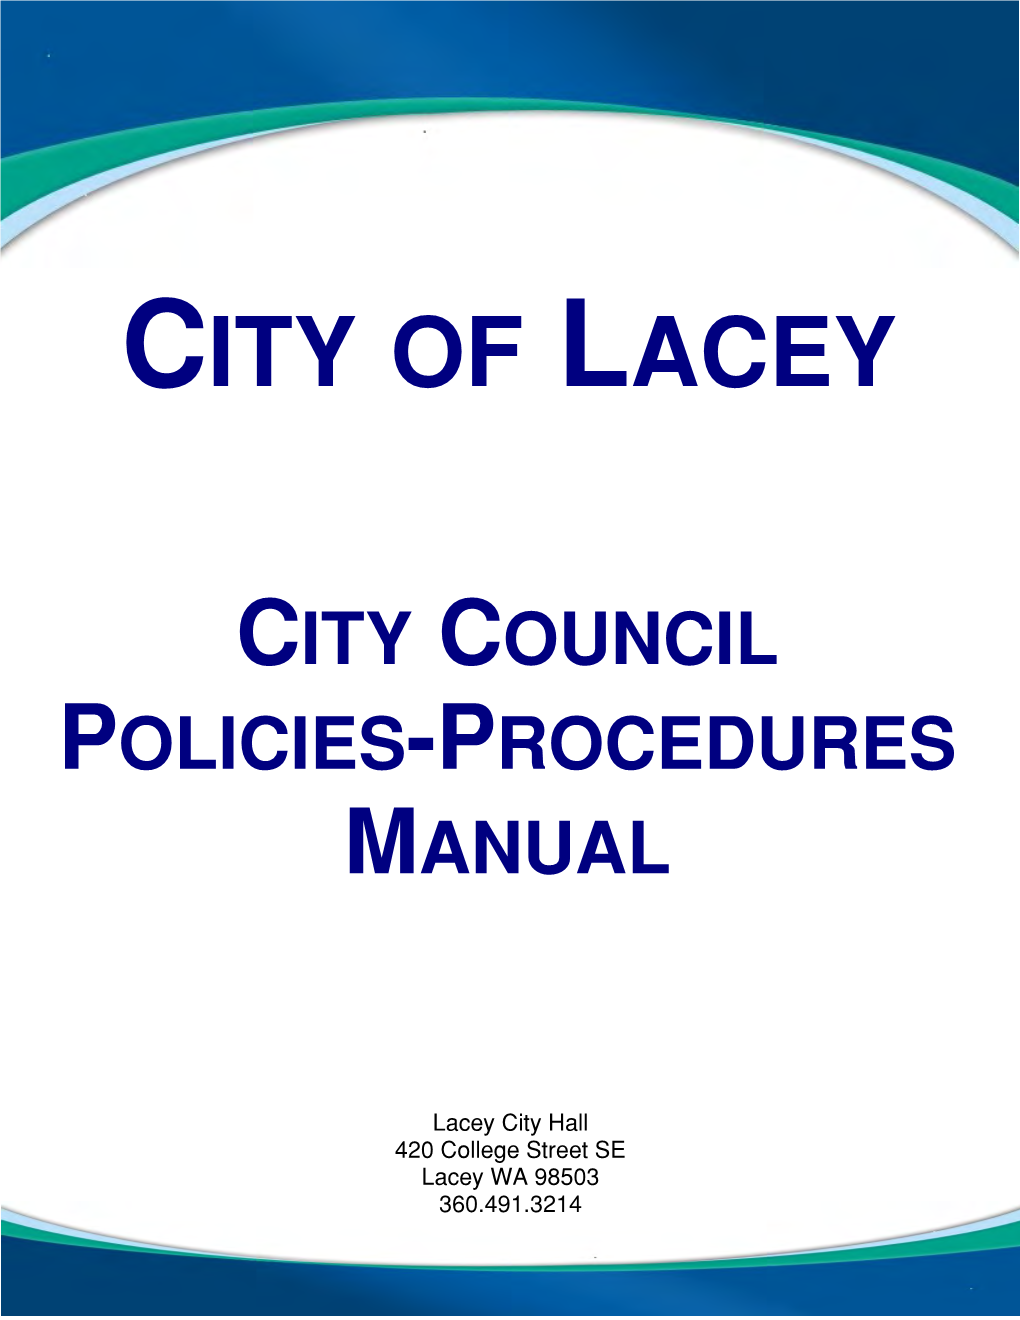 Lacey City Council Policies-Procedures Manual 06.25.15